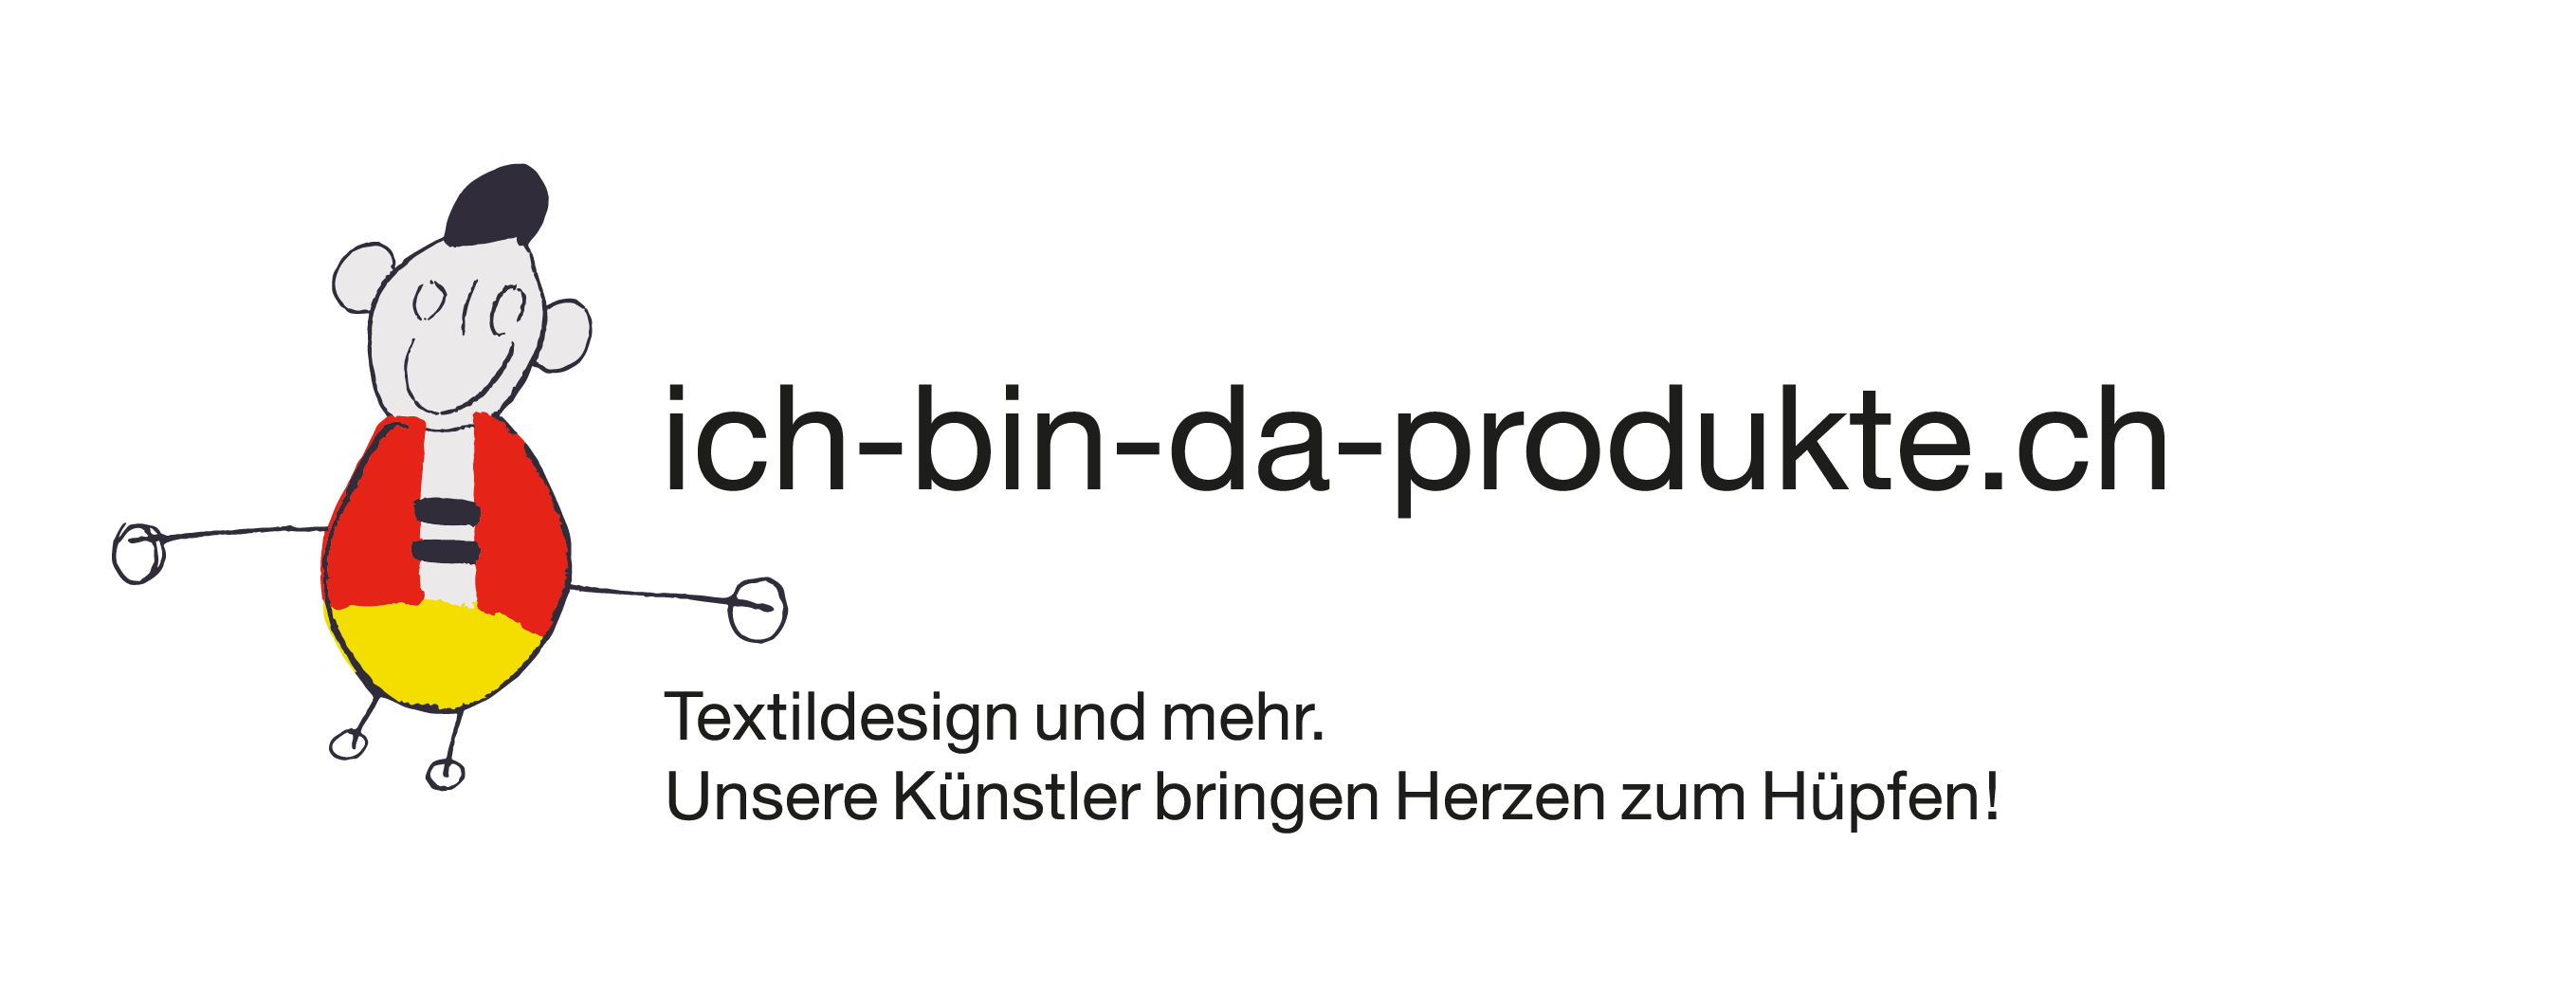 ich-bin-da-produkte-logo